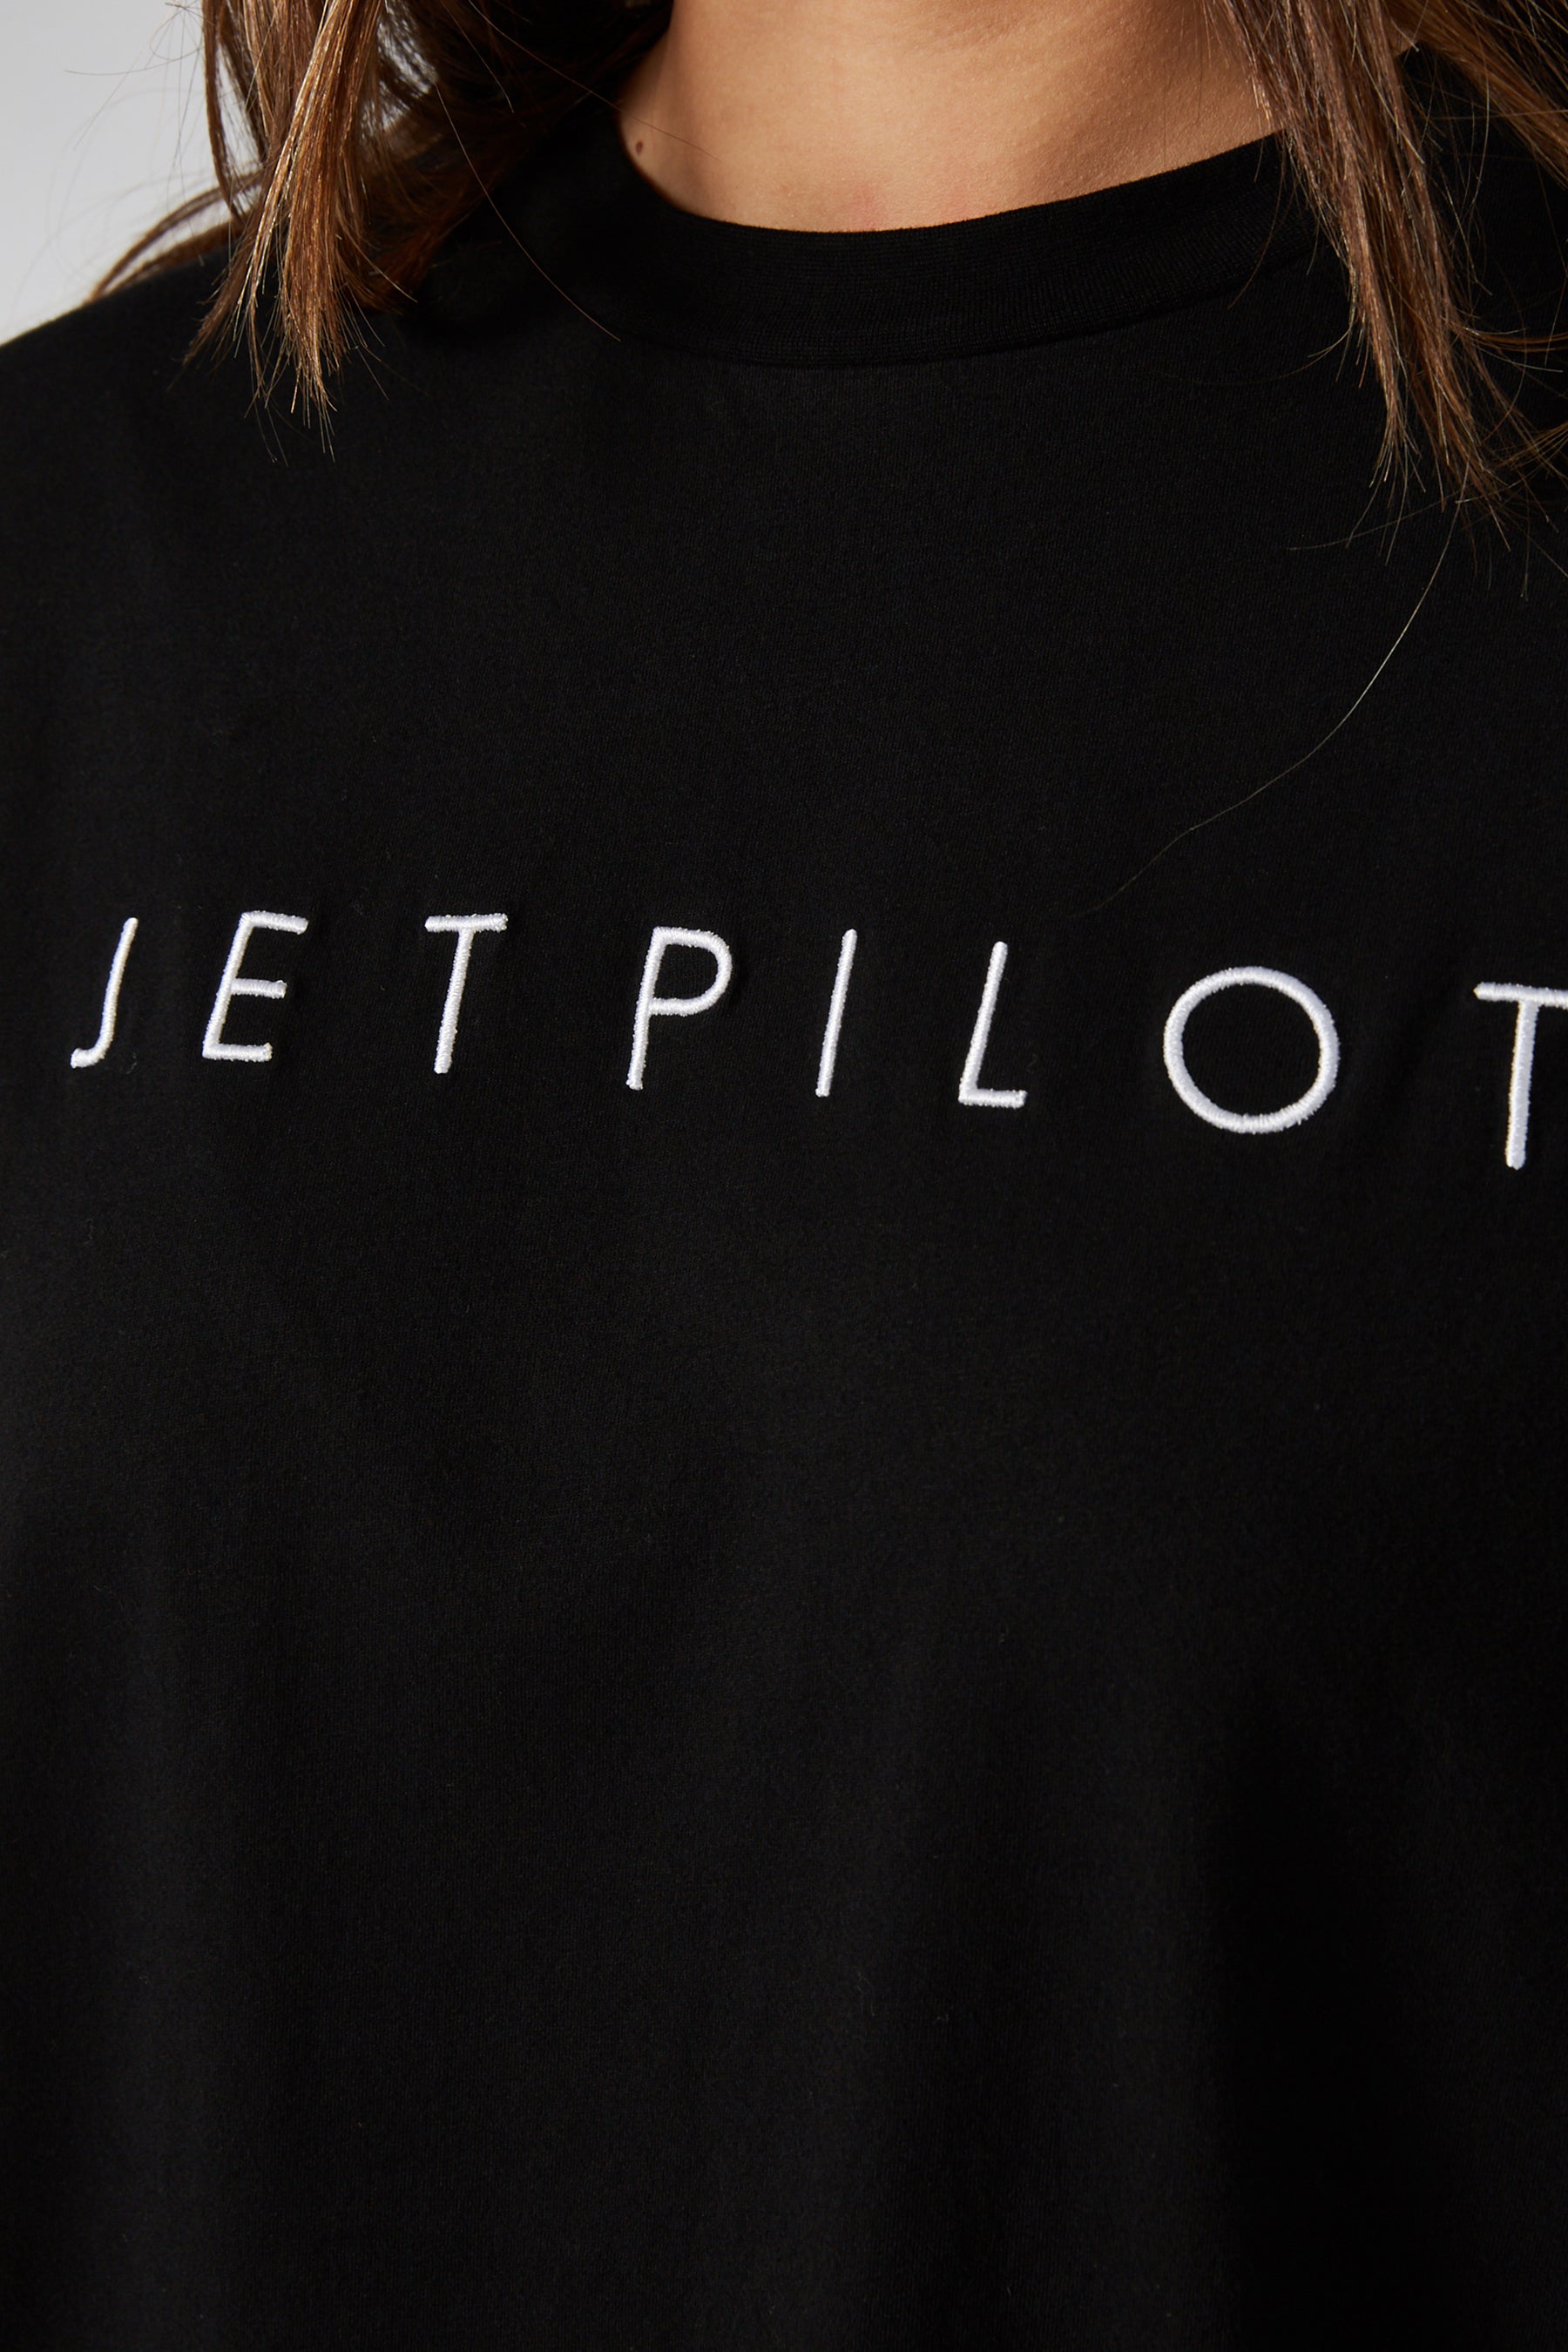 Jetpilot Simple Ladies Oversized S/S Tee - Black